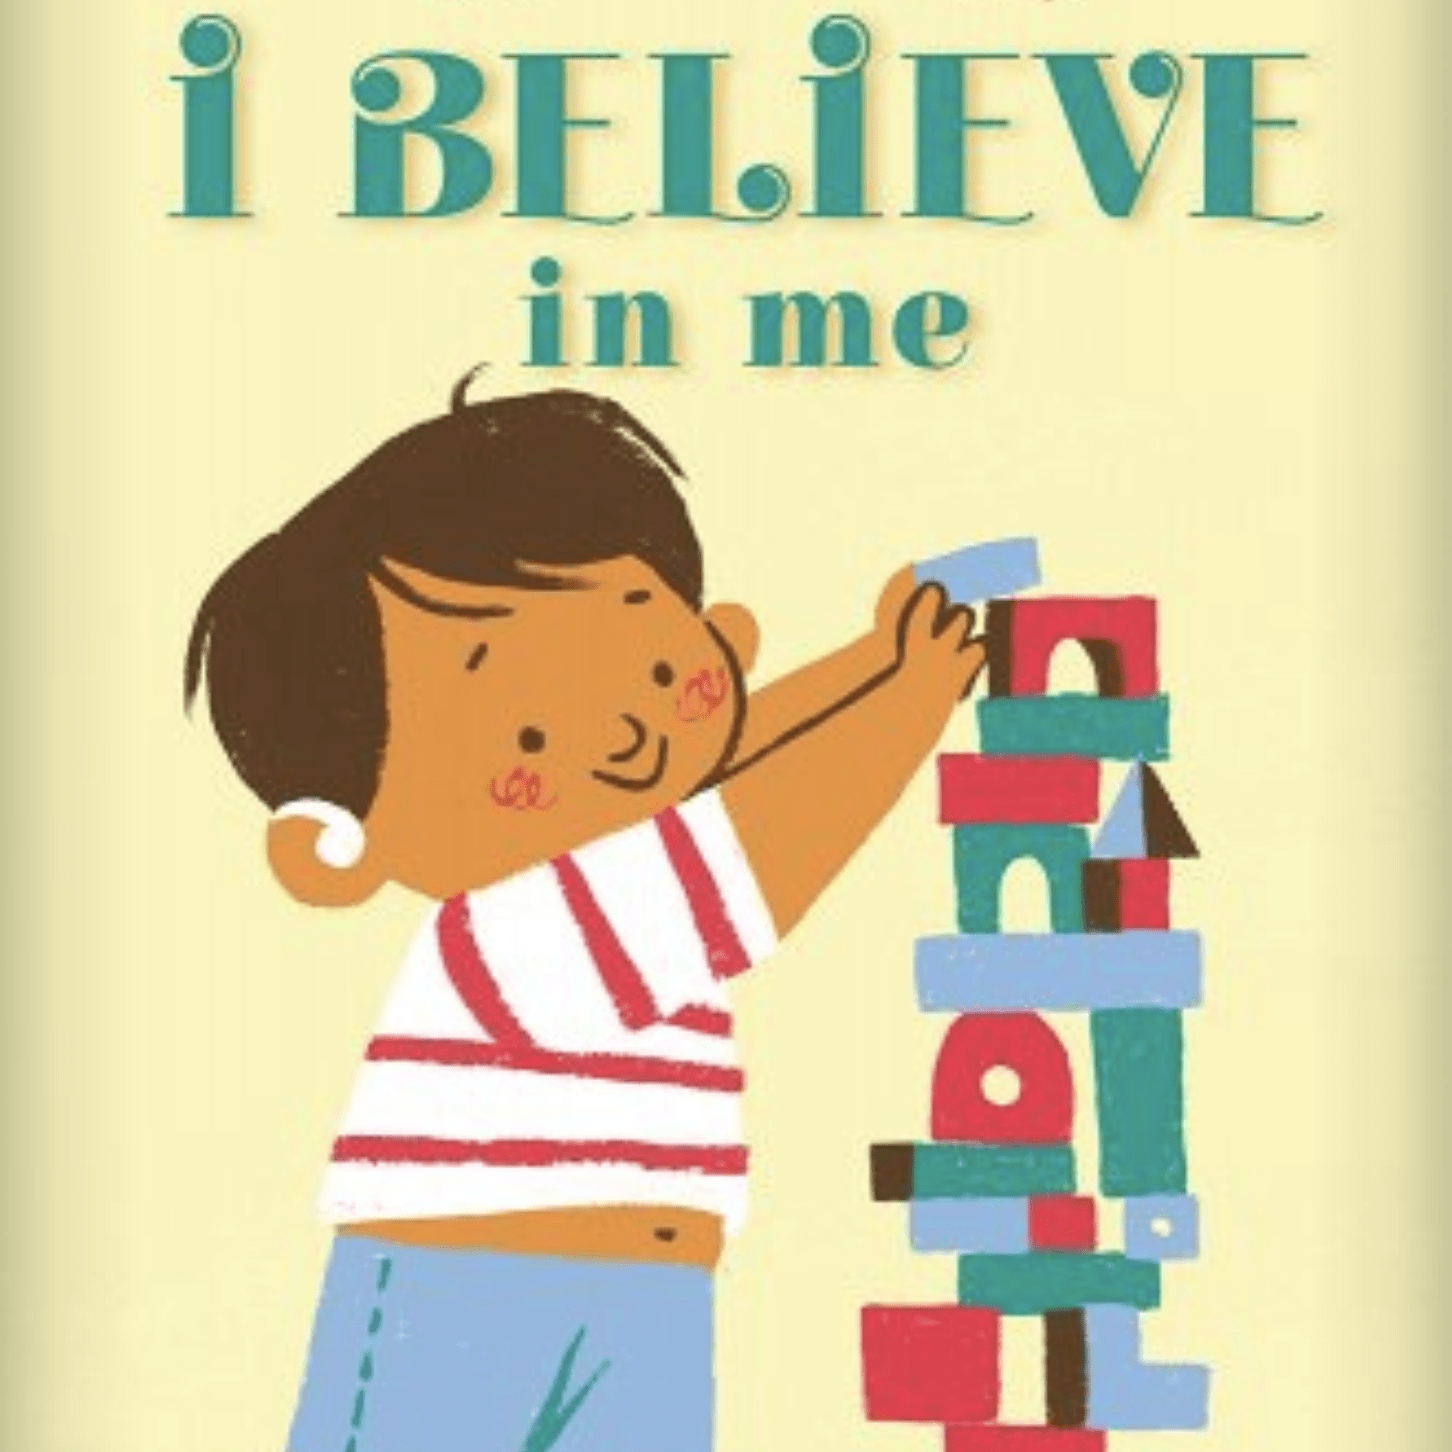 i believe in me